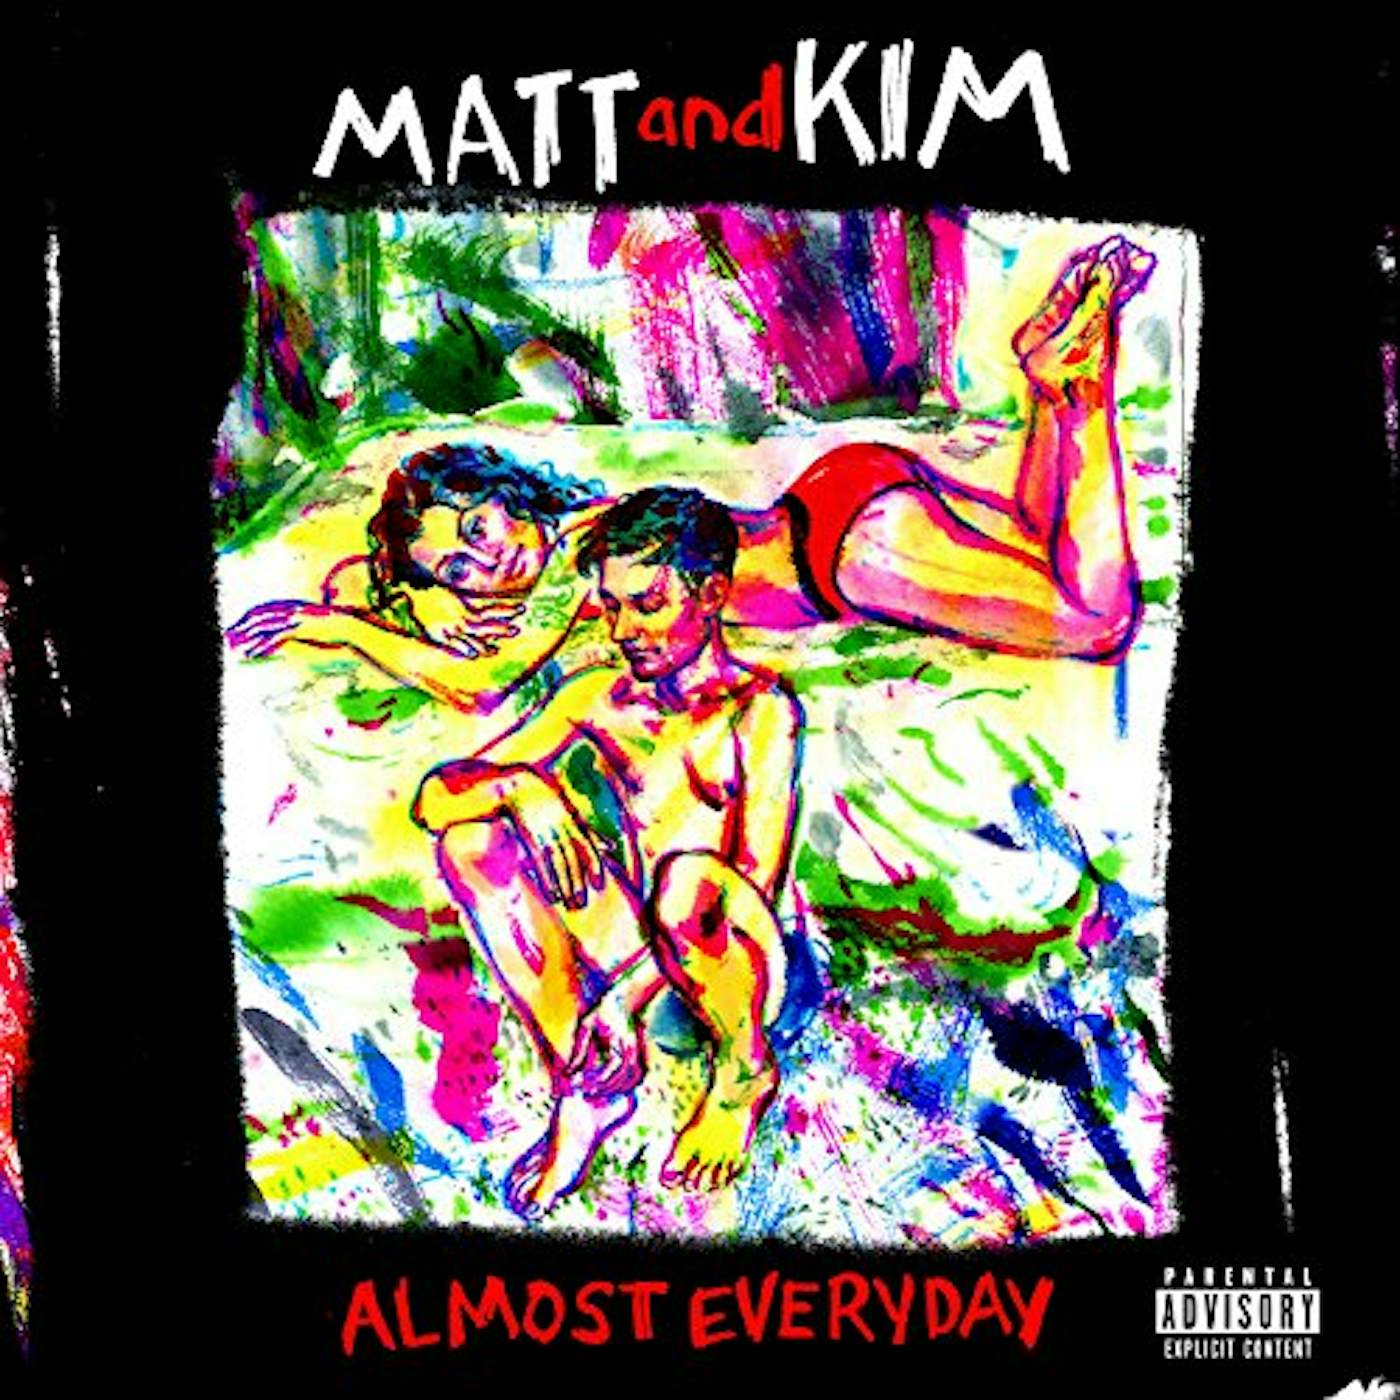 Matt and Kim ALMOST EVERYDAY CD